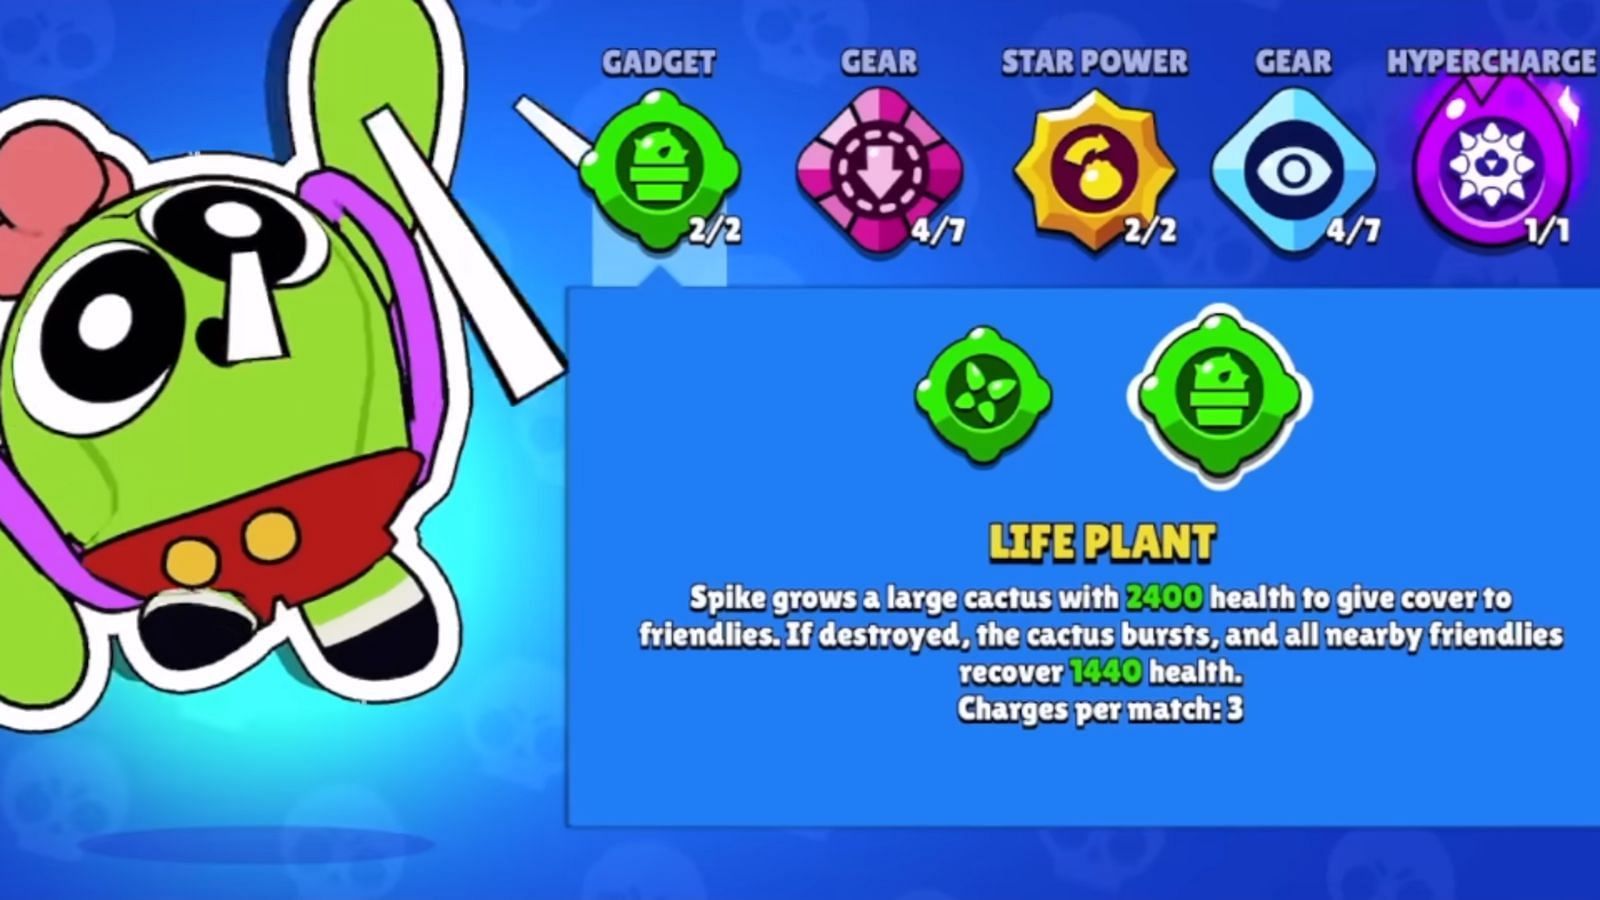 Life Plant Gadget (Image via Supercell)